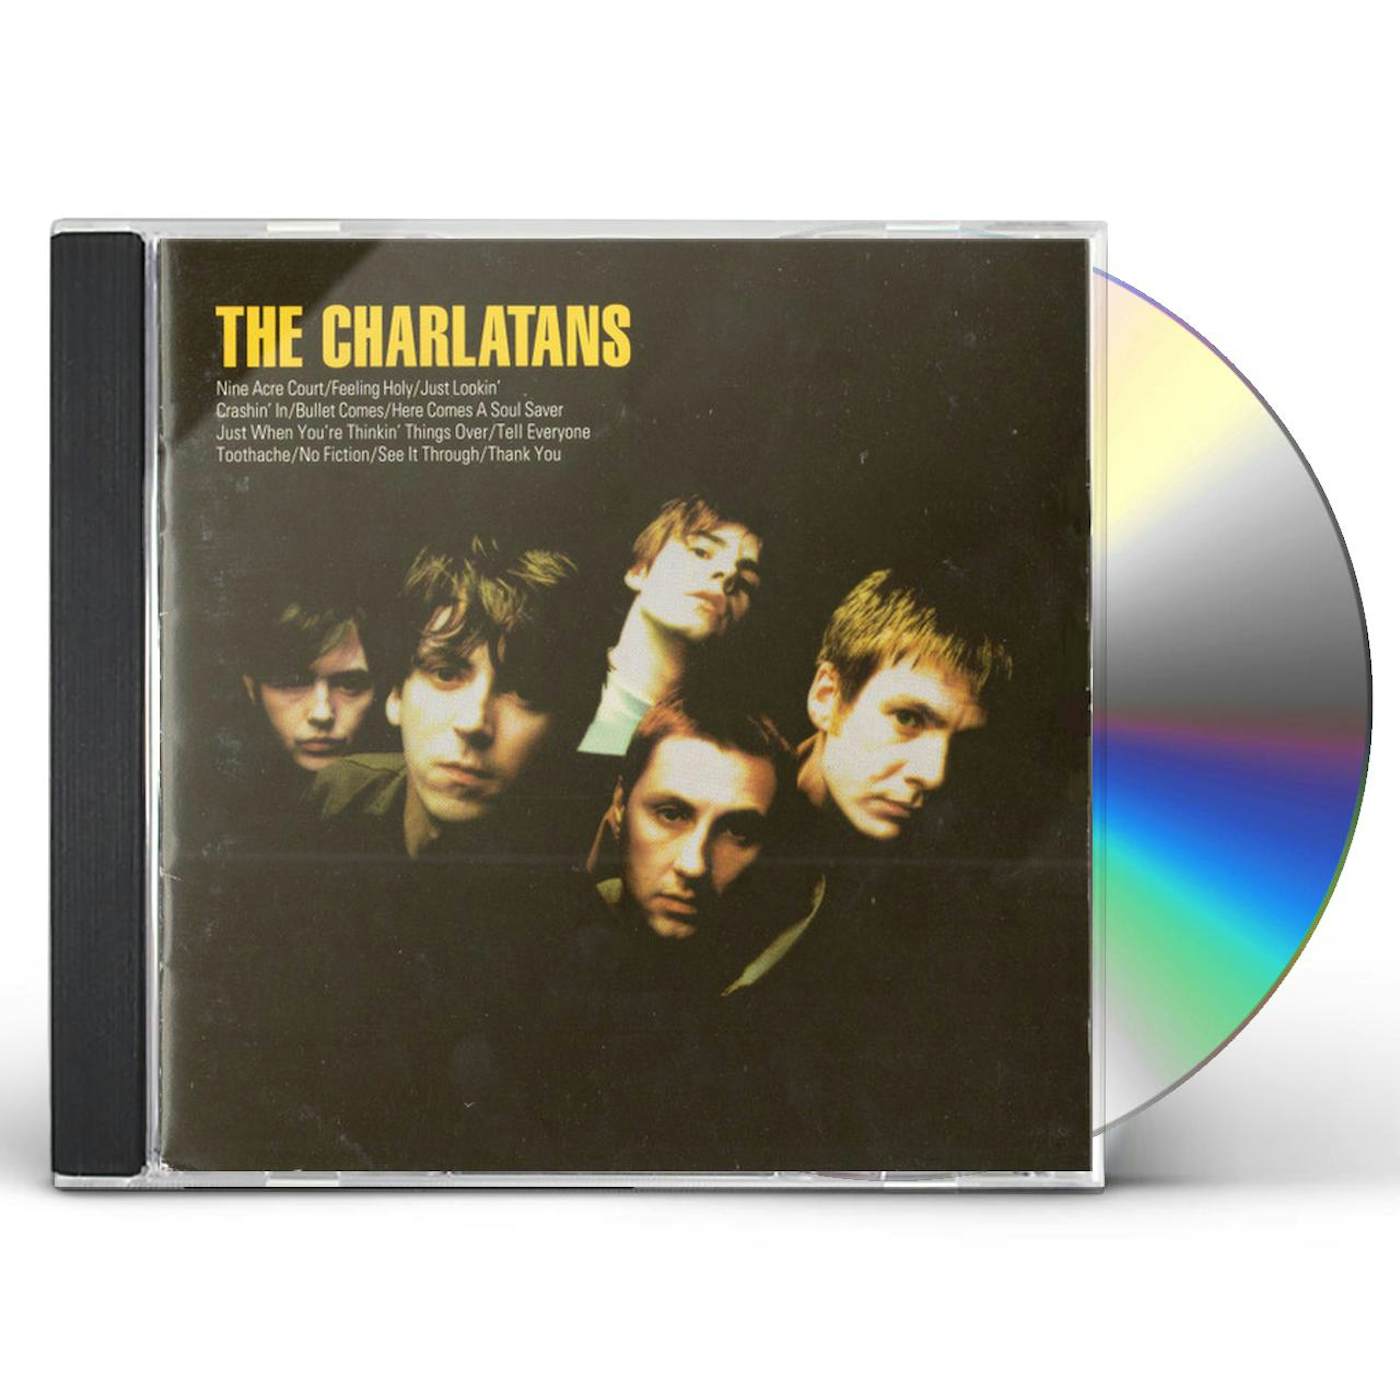 The Charlatans CD